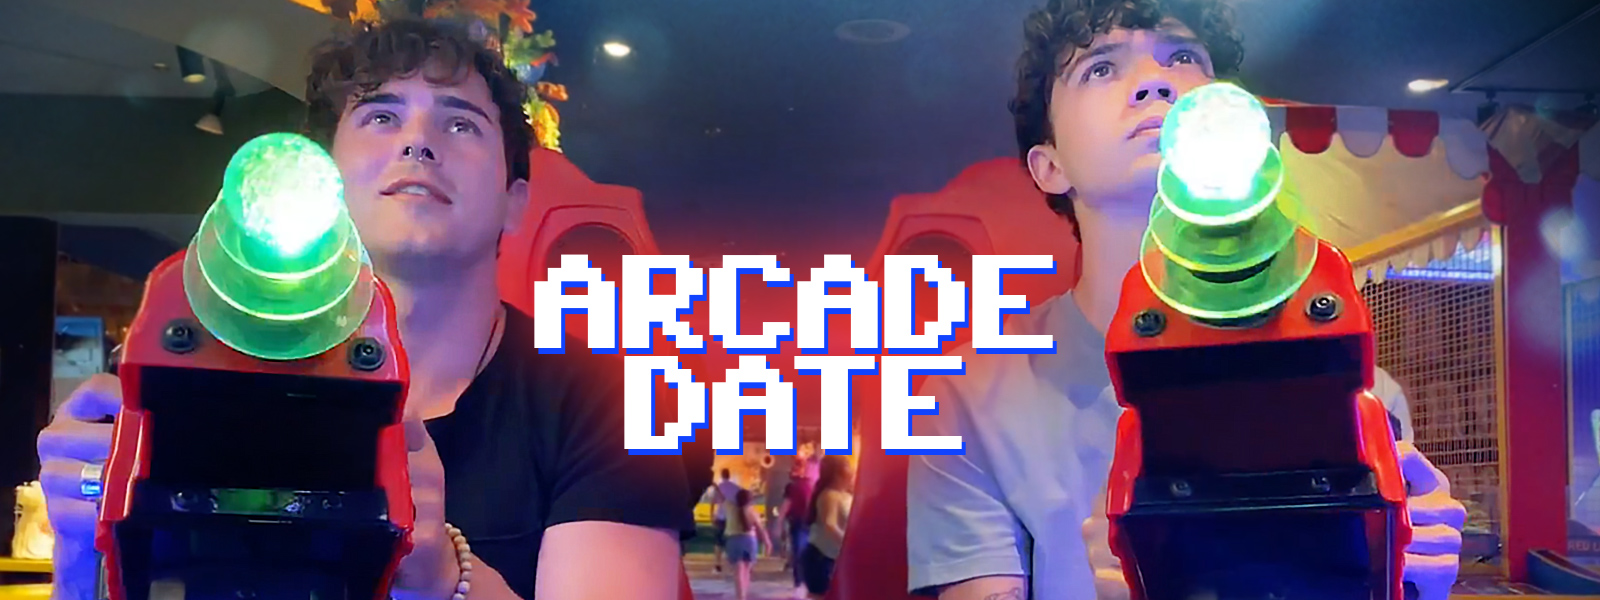 Arcade Date